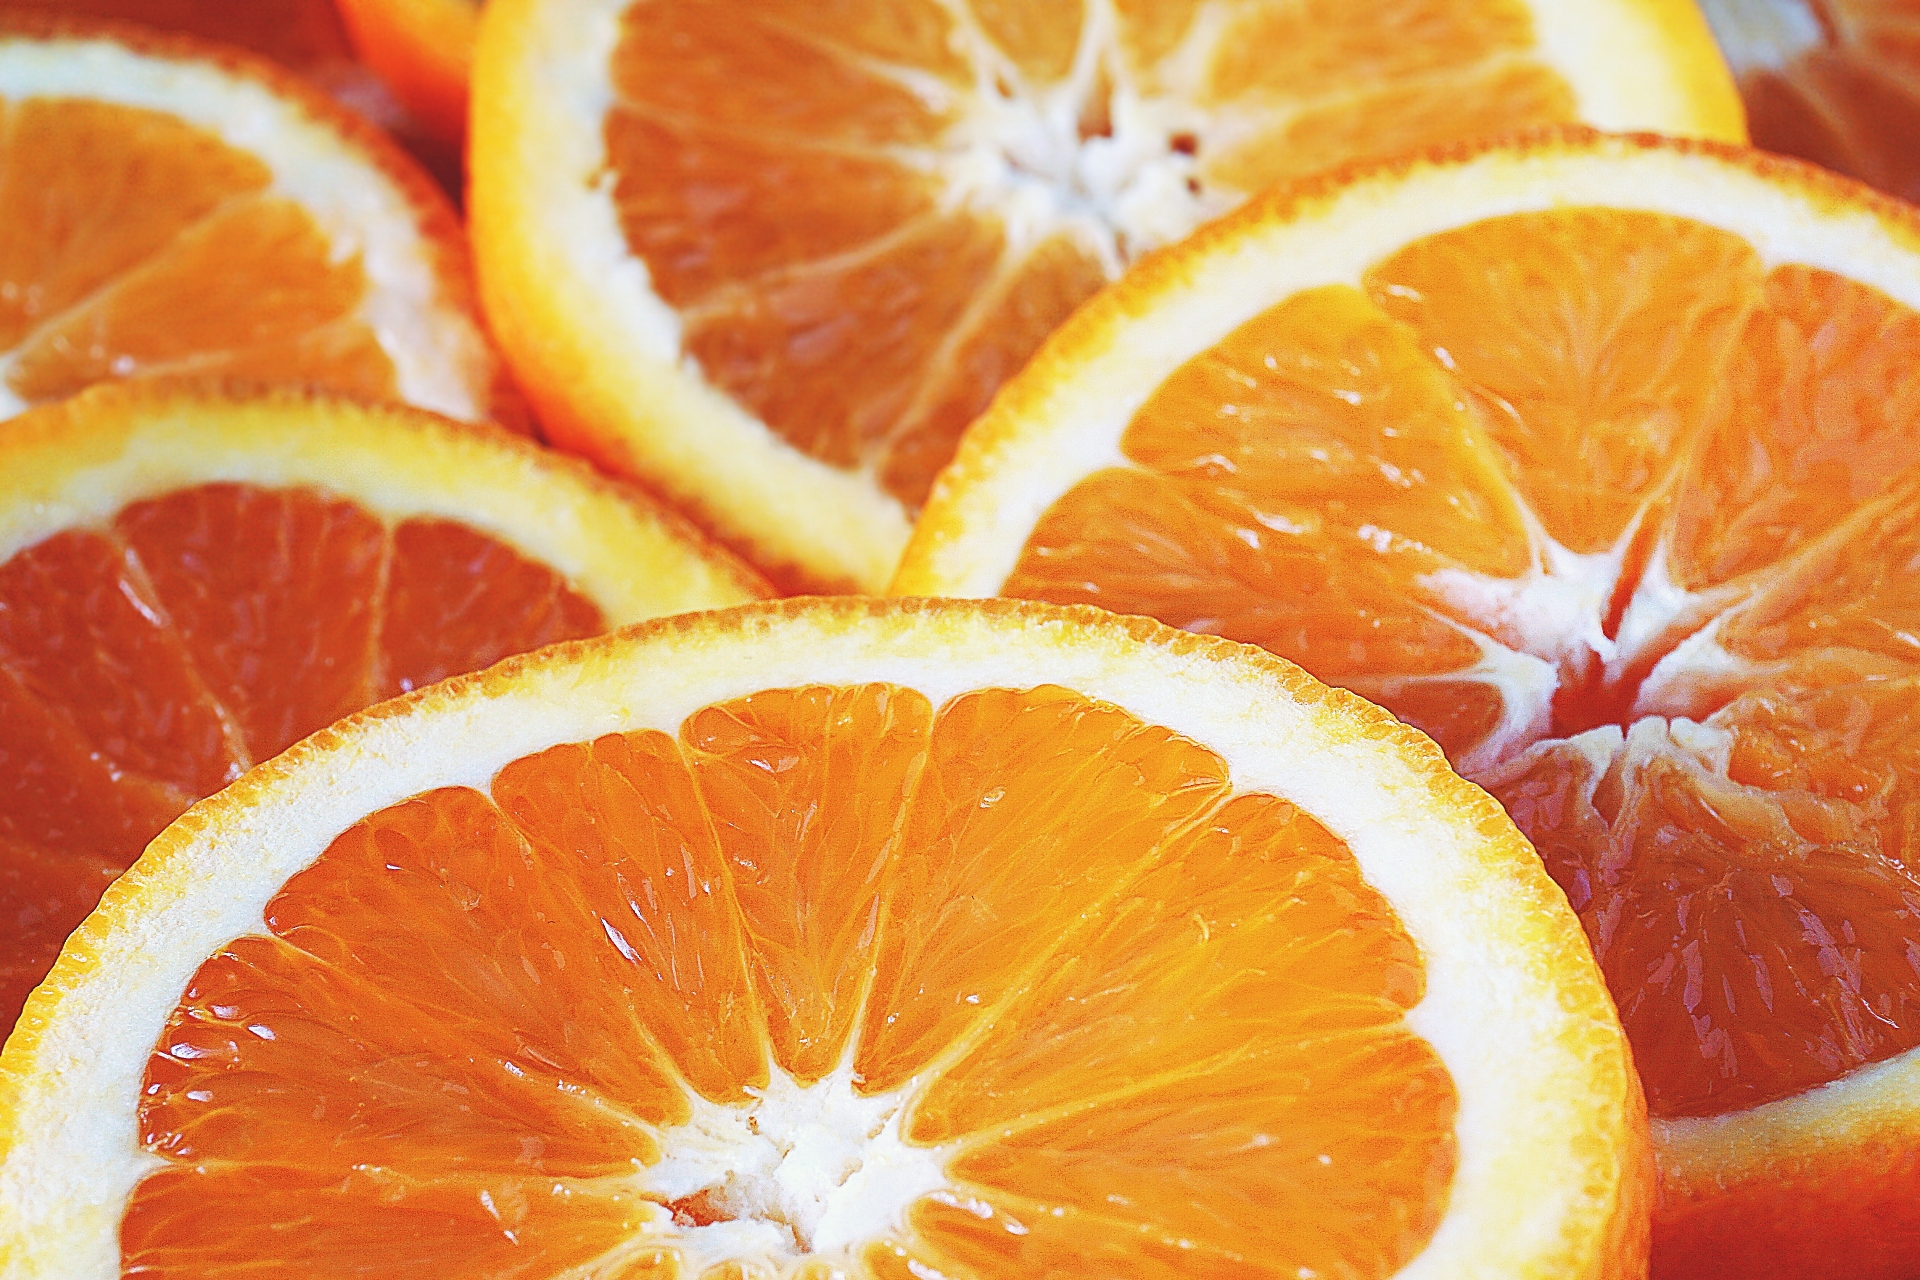 Citrus fruits have a positive effect on collagen production —  lemons, oranges, tangerines and grapefruits